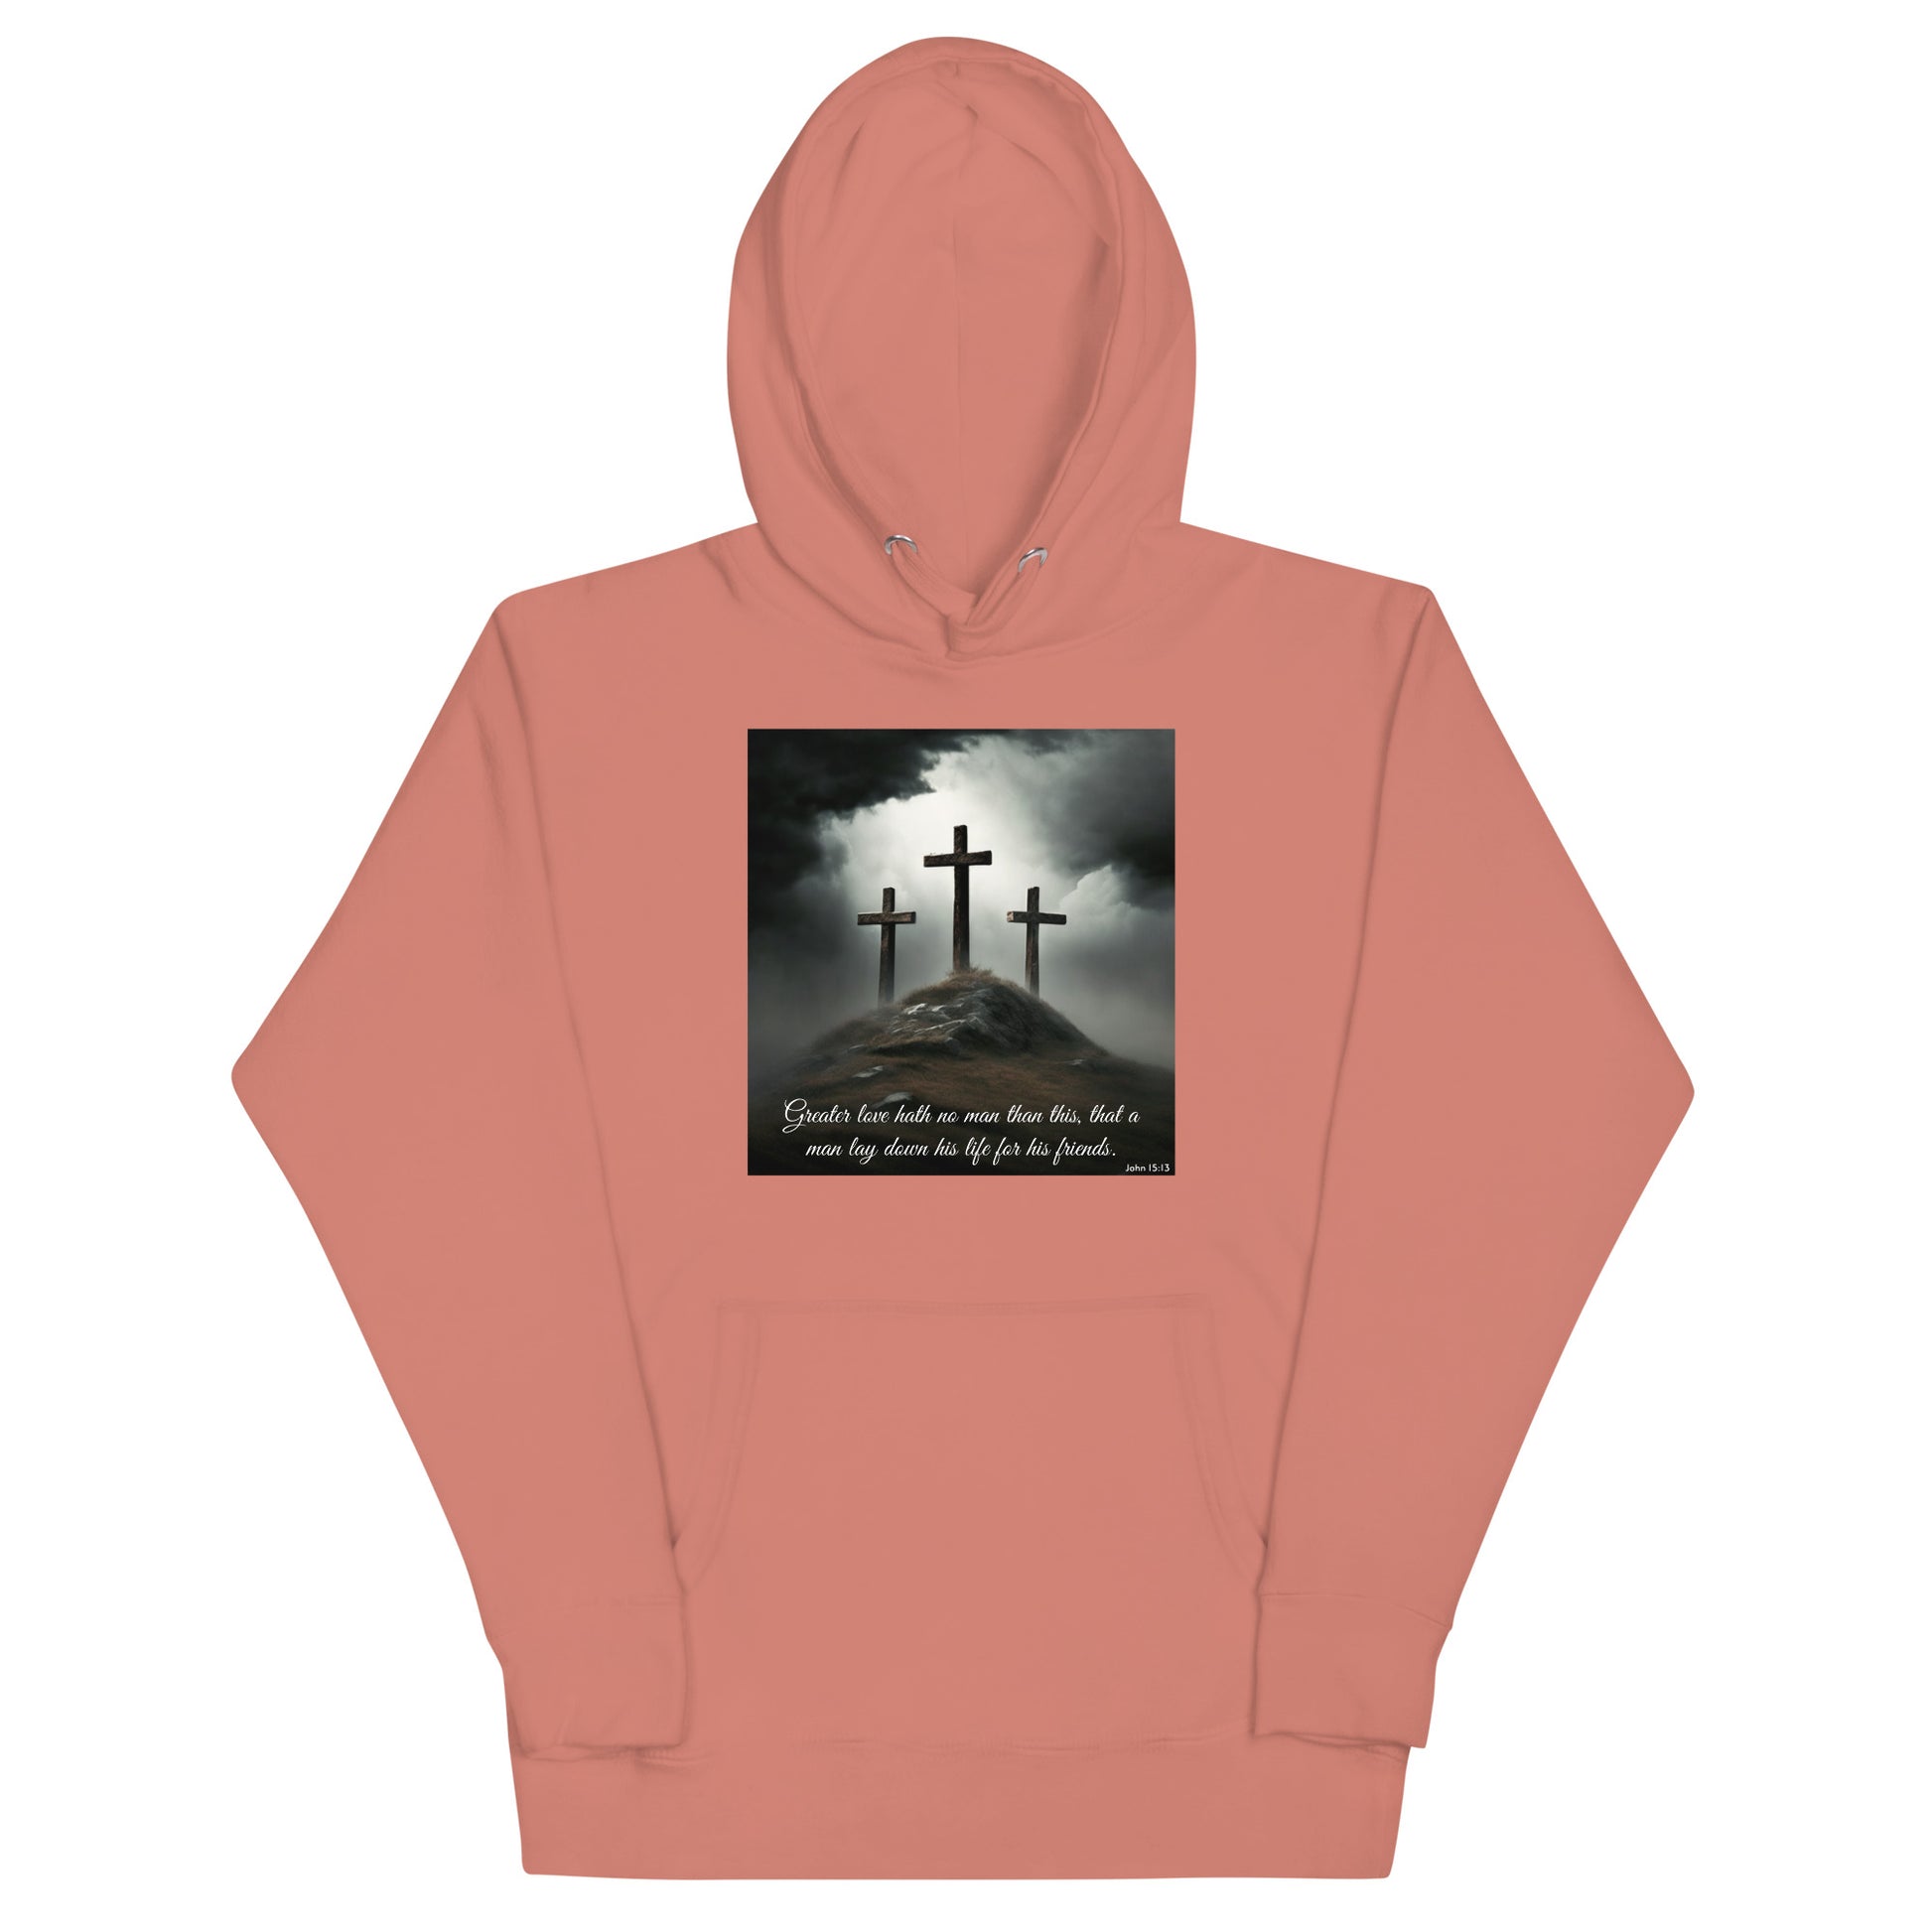 Three Crosses Crucifixion Men's Hooded Sweatshirt John 15:13 Dusty Rose